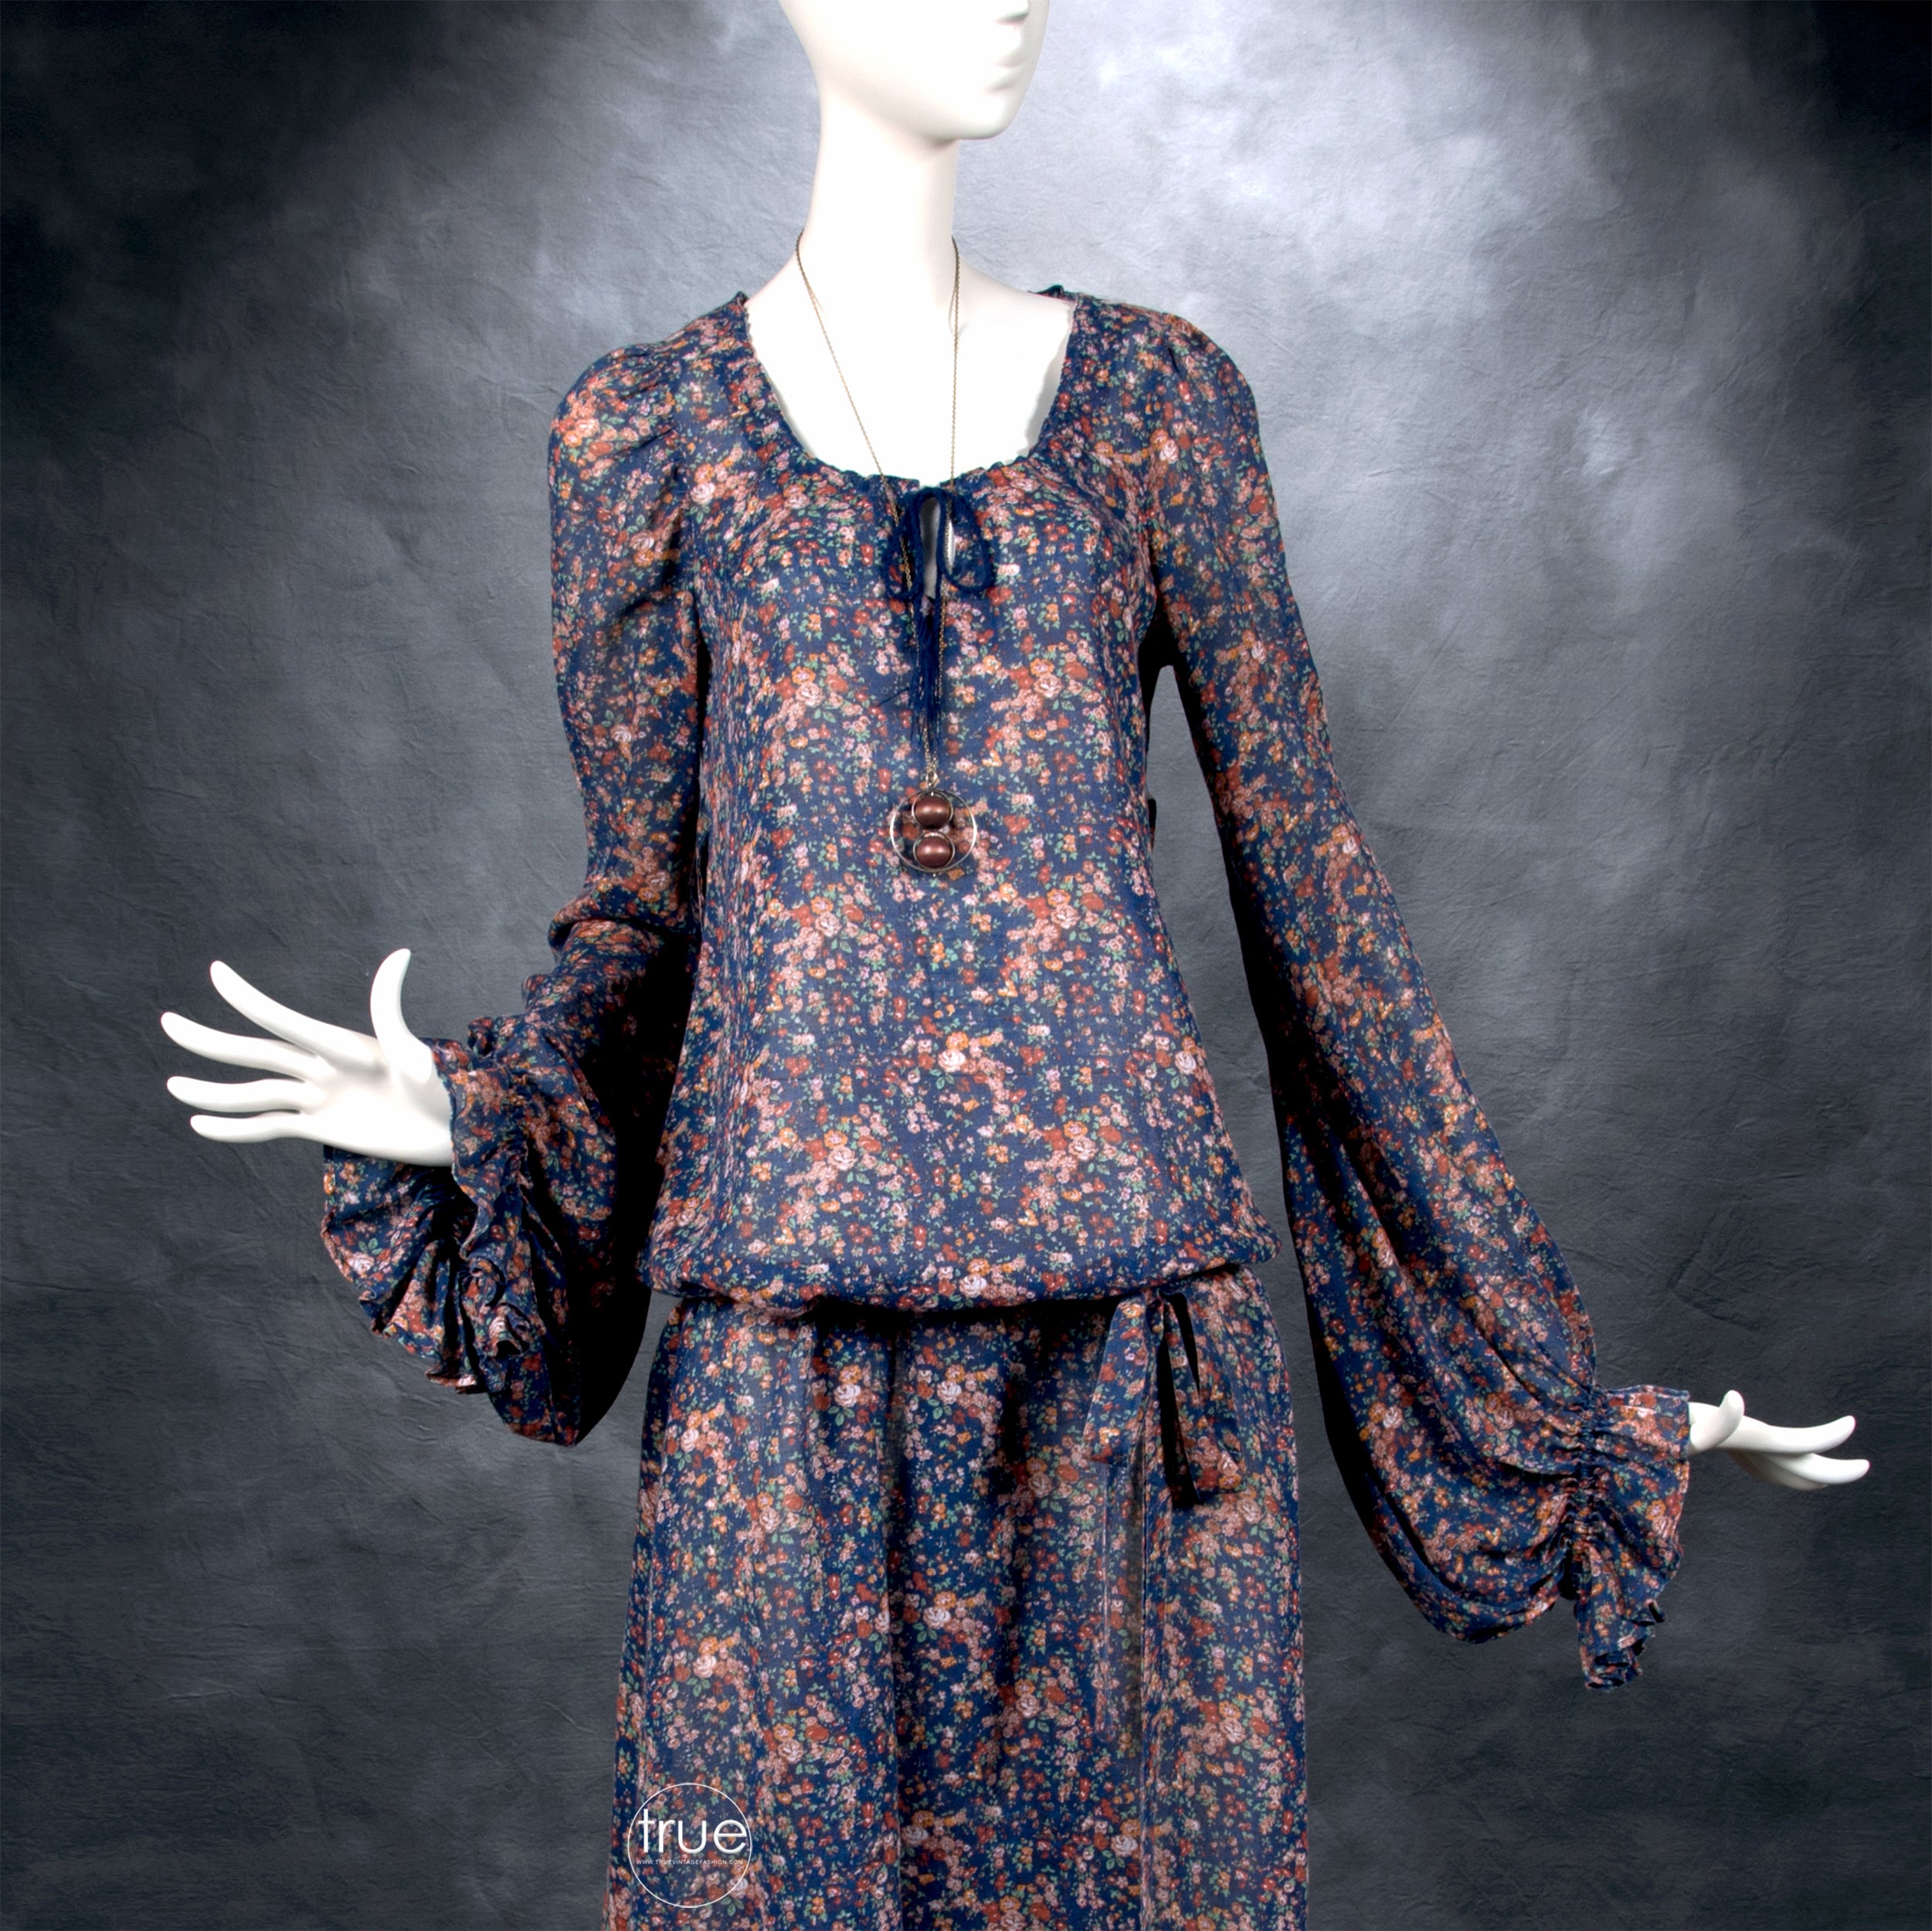 70s Dress Pattern, Summer Dress Pattern, Pattern Maxi Dress, DIY